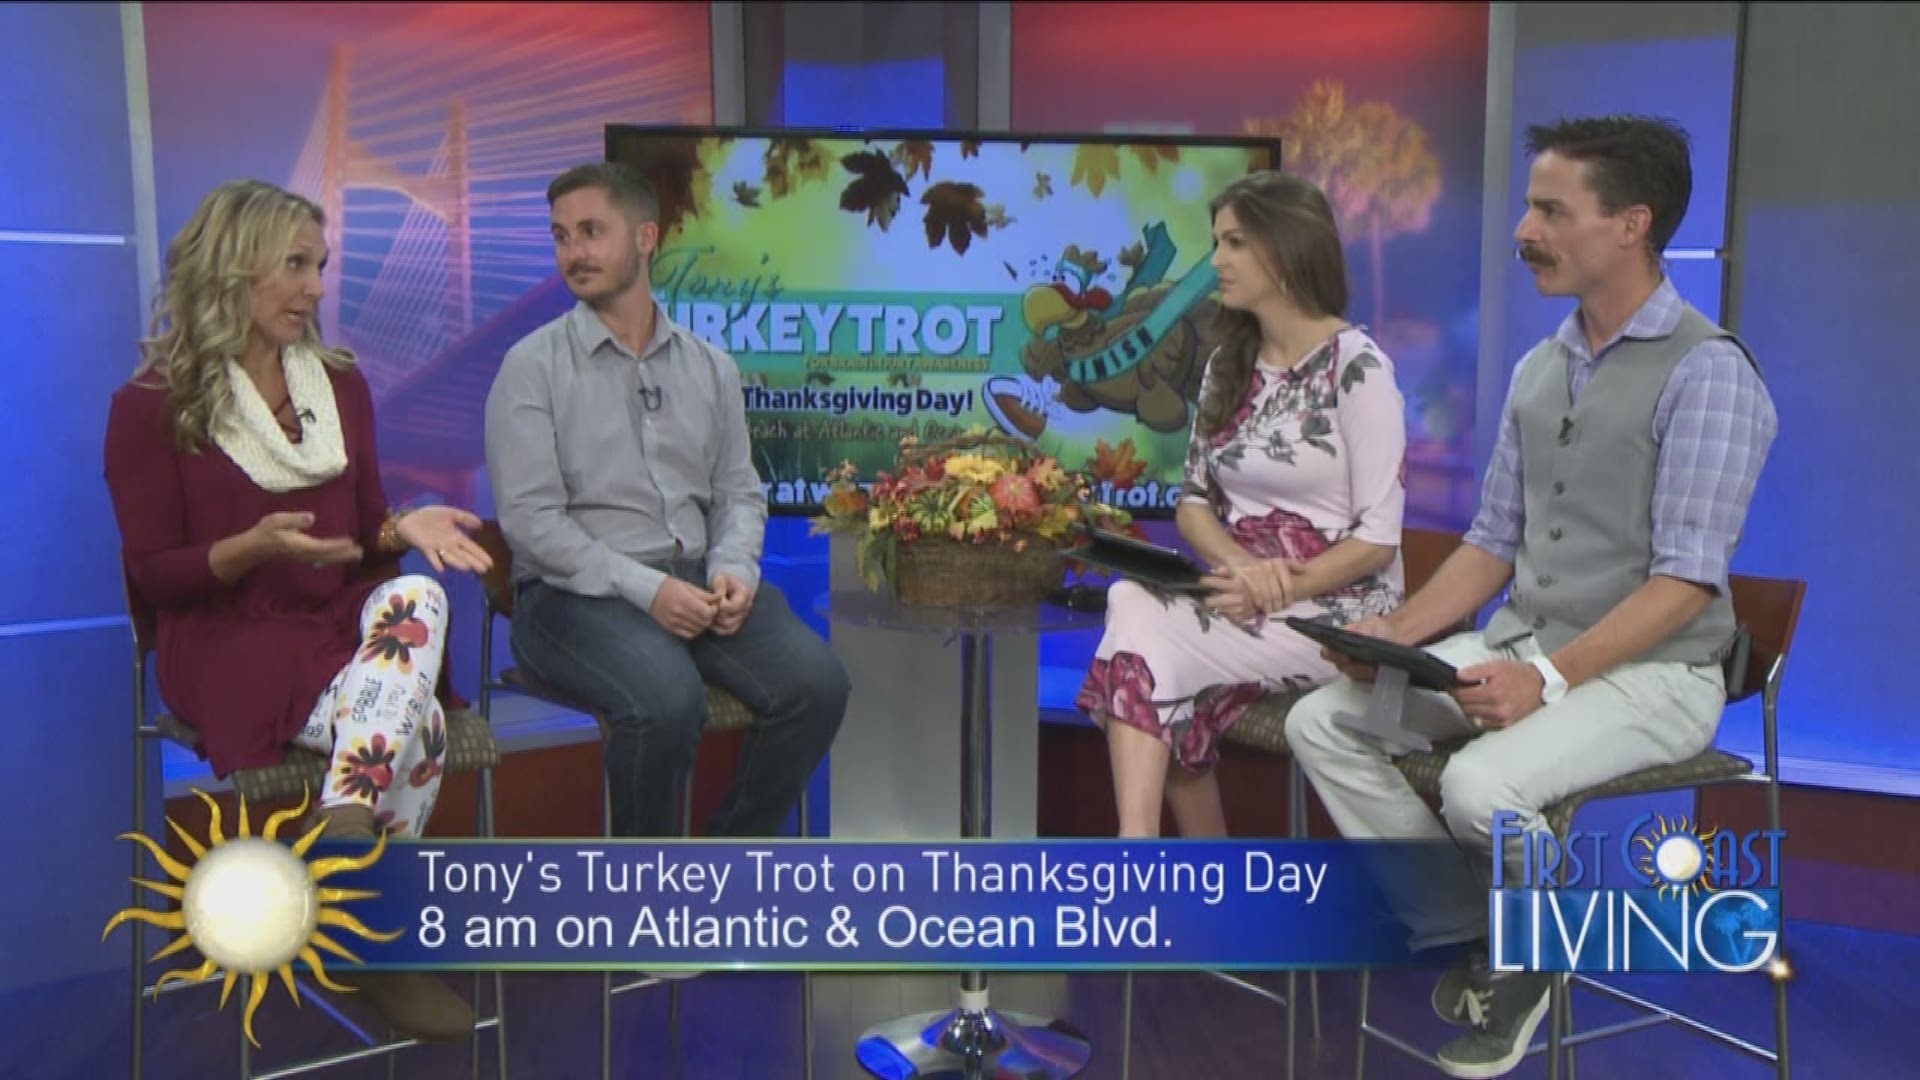 Tony's Turkey Trot on Thanksgiving Day